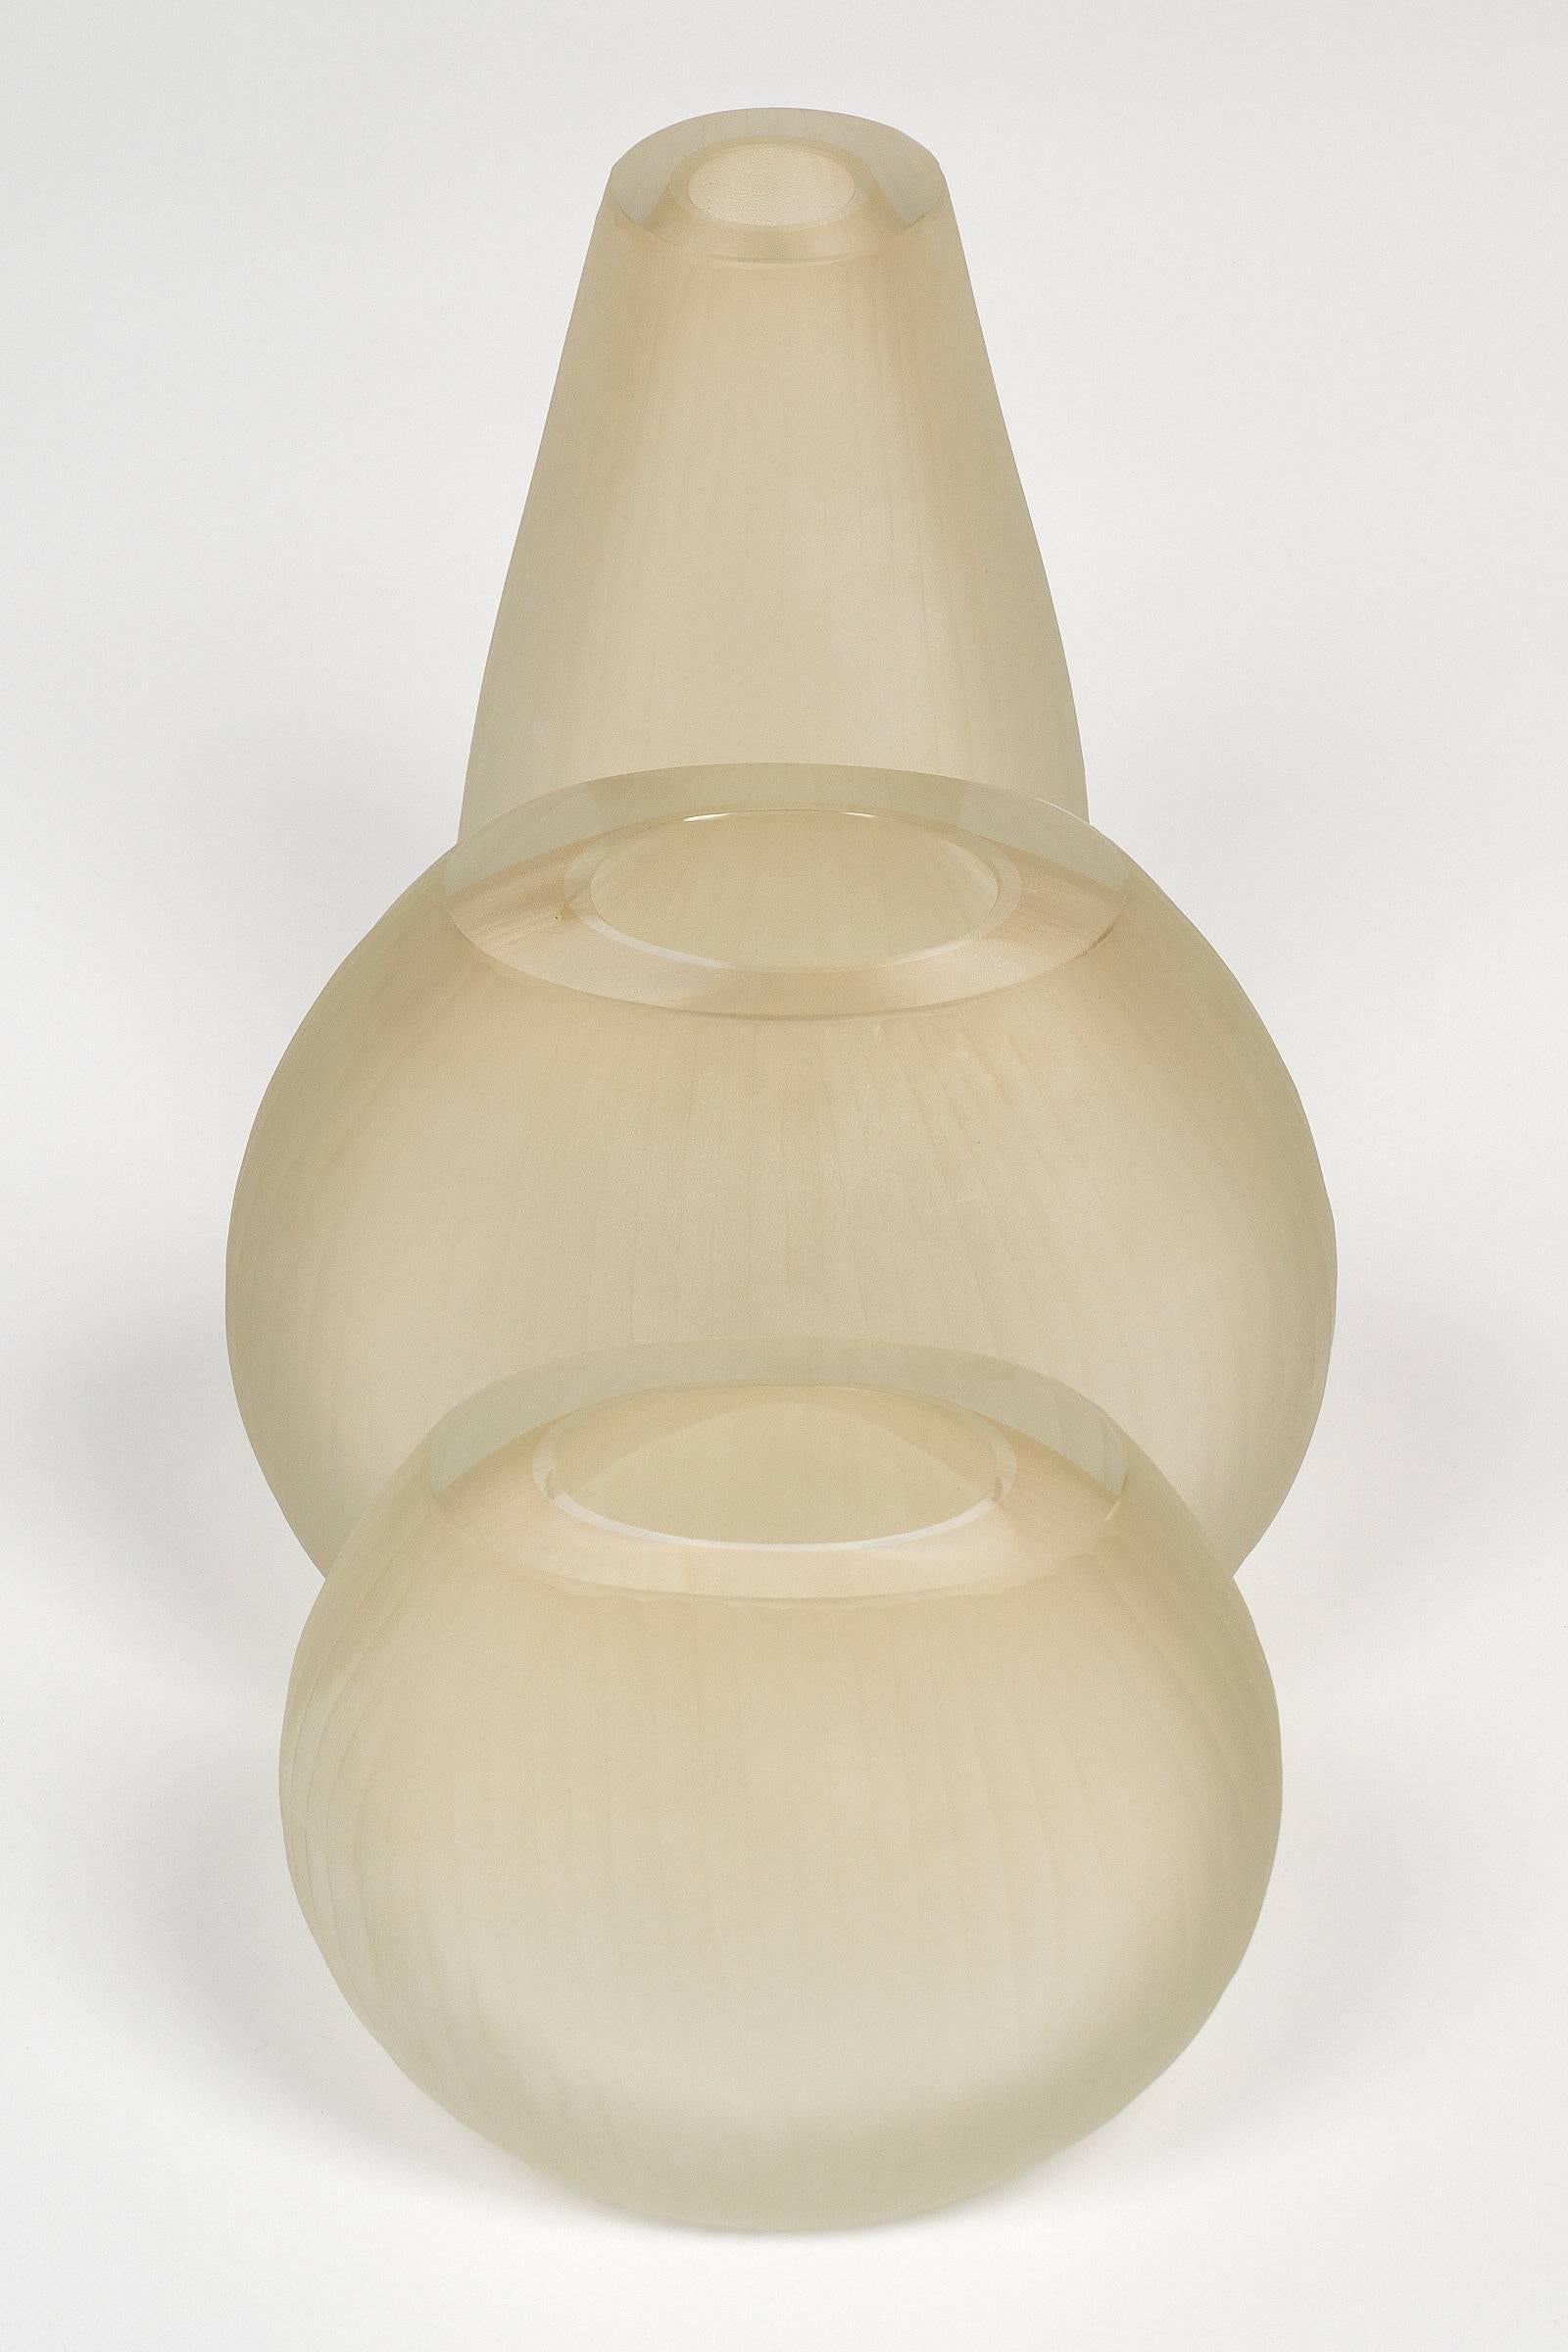 Italian Three Murano Glass Vases in the Tobia Scarpa Style